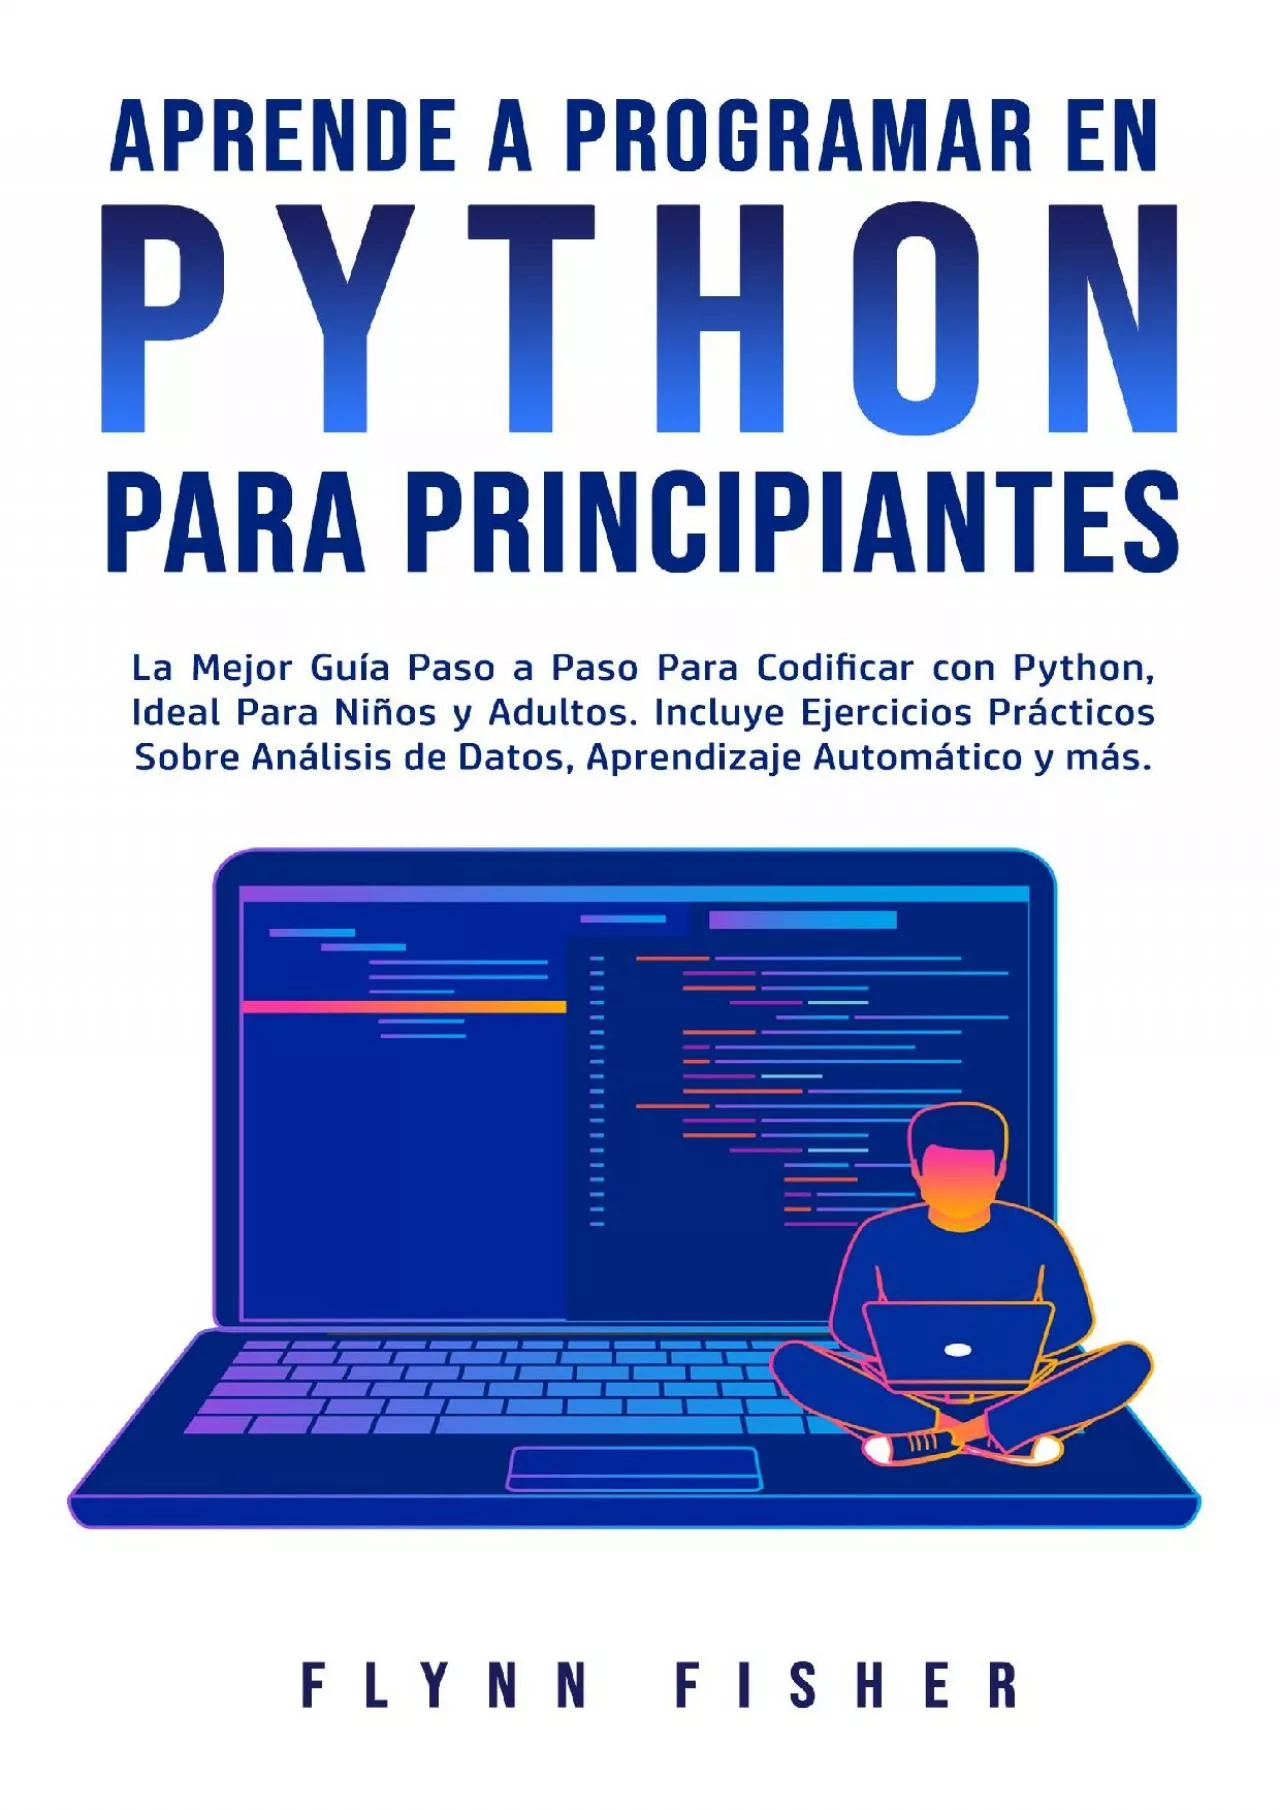 [READ]-Aprende a Programar en Python Para Principiantes: La mejor guía paso a paso para